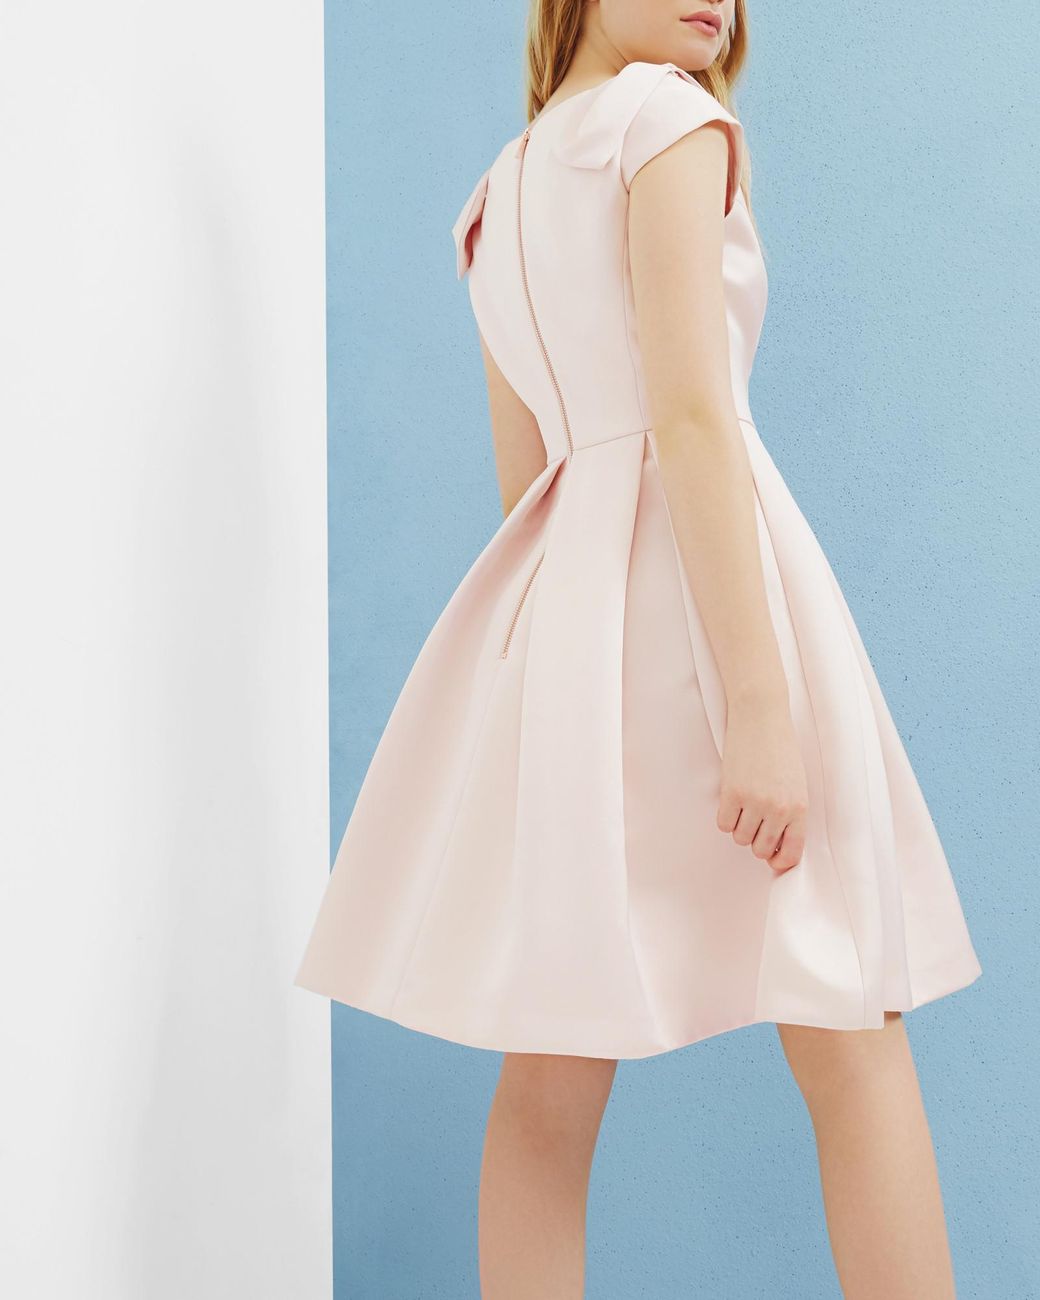 Beschrijving Kapel bedrijf Ted Baker Bow Detail Pleated Dress in Pink | Lyst